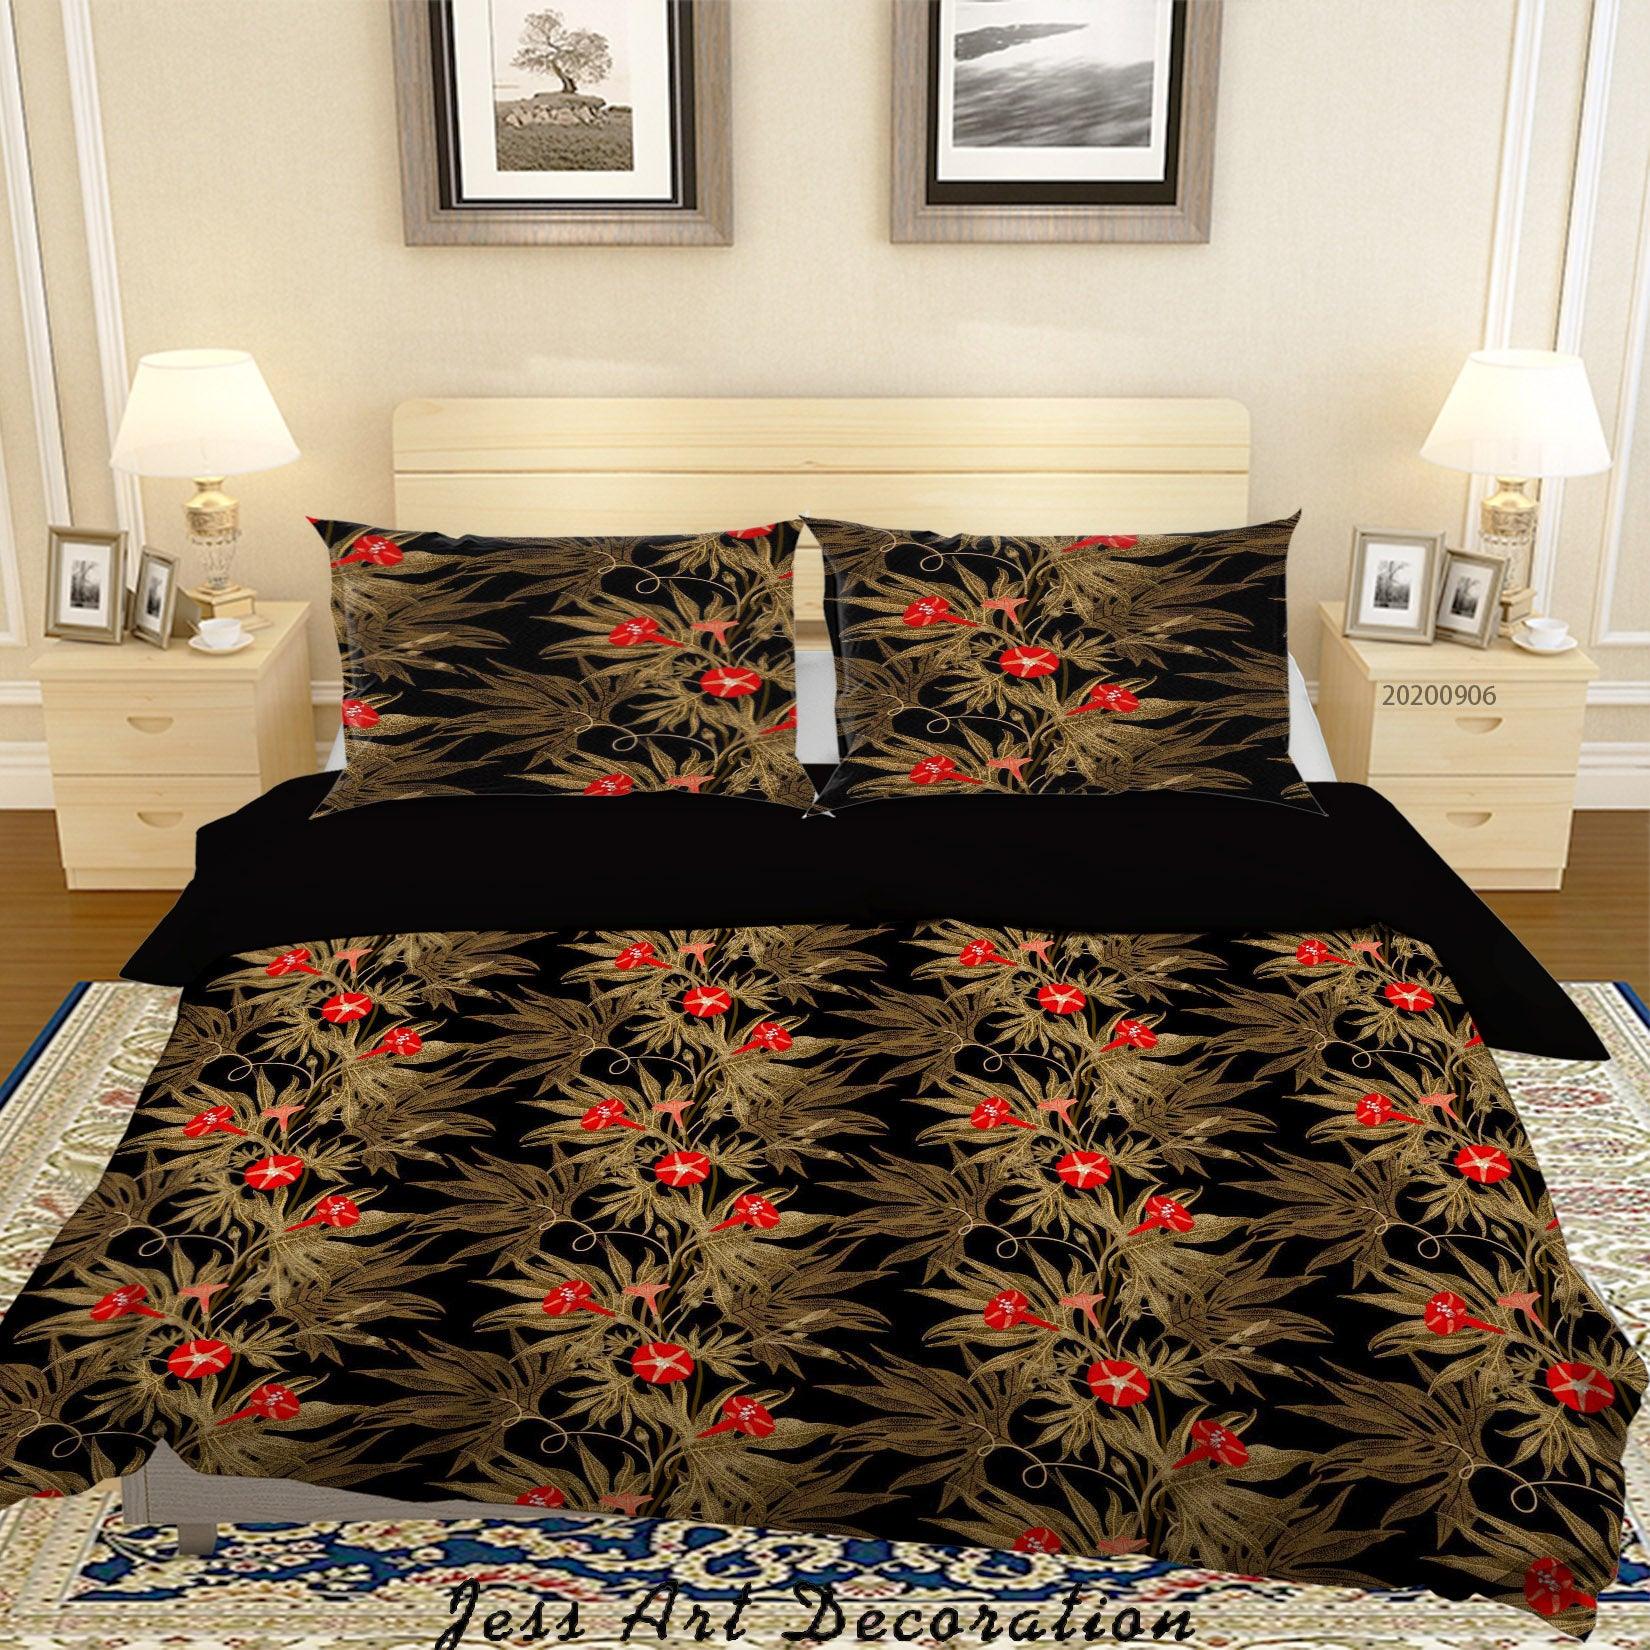 3D Vintage Leaves Red Floral Pattern Quilt Cover Set Bedding Set Duvet Cover Pillowcases WJ 3626- Jess Art Decoration